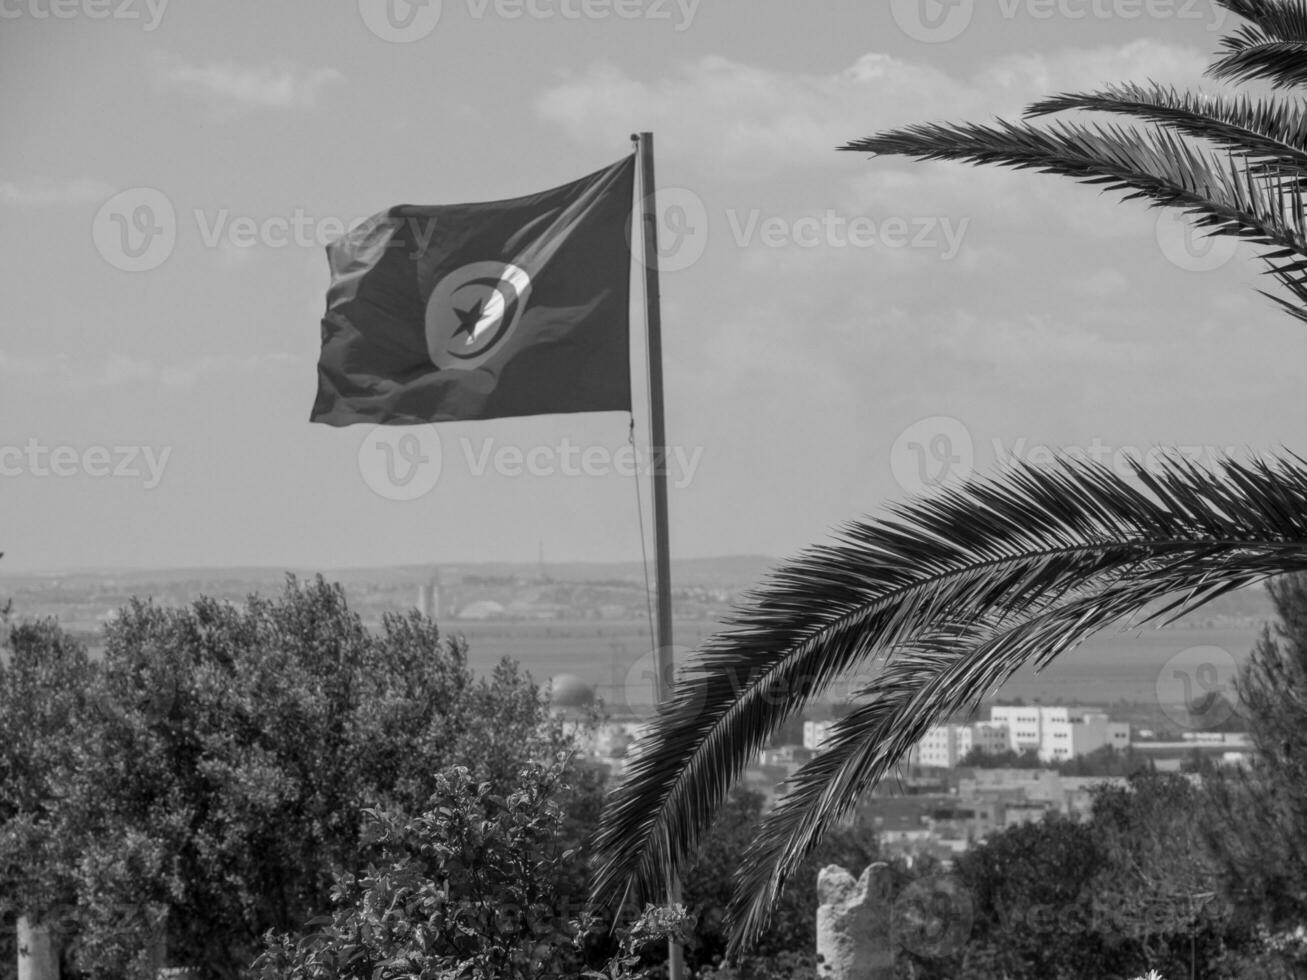 de stad tunis in tunesië foto